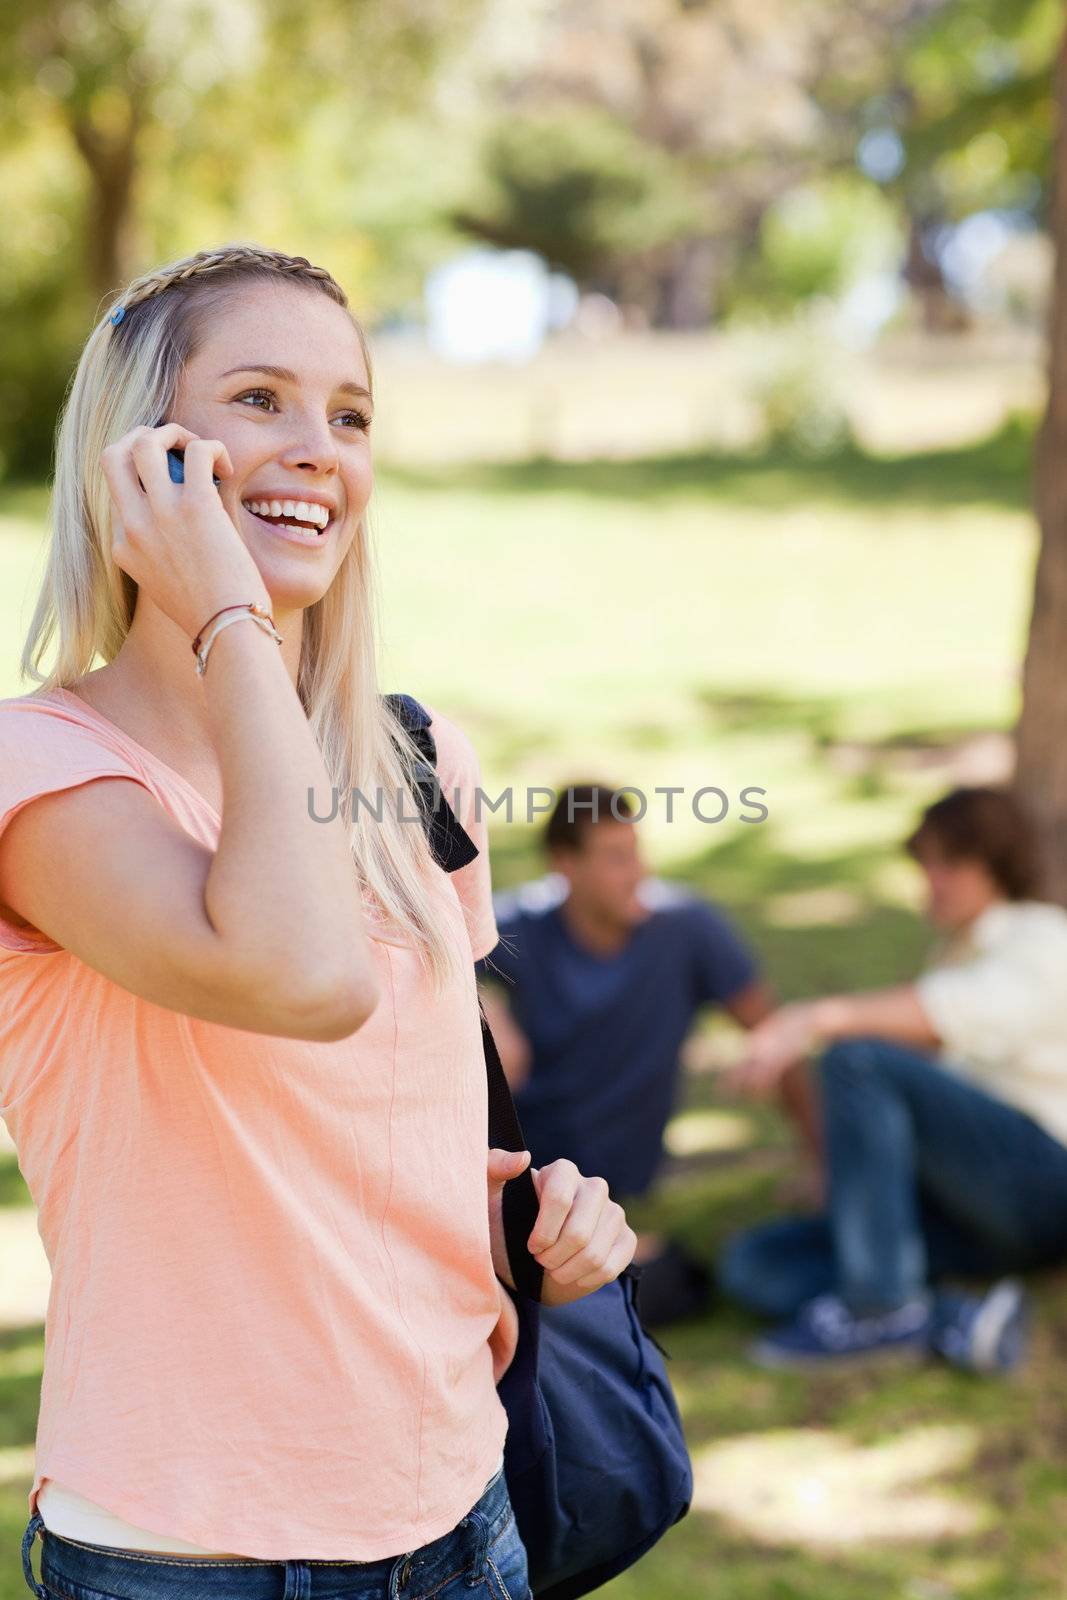 Teenager on the phone by Wavebreakmedia